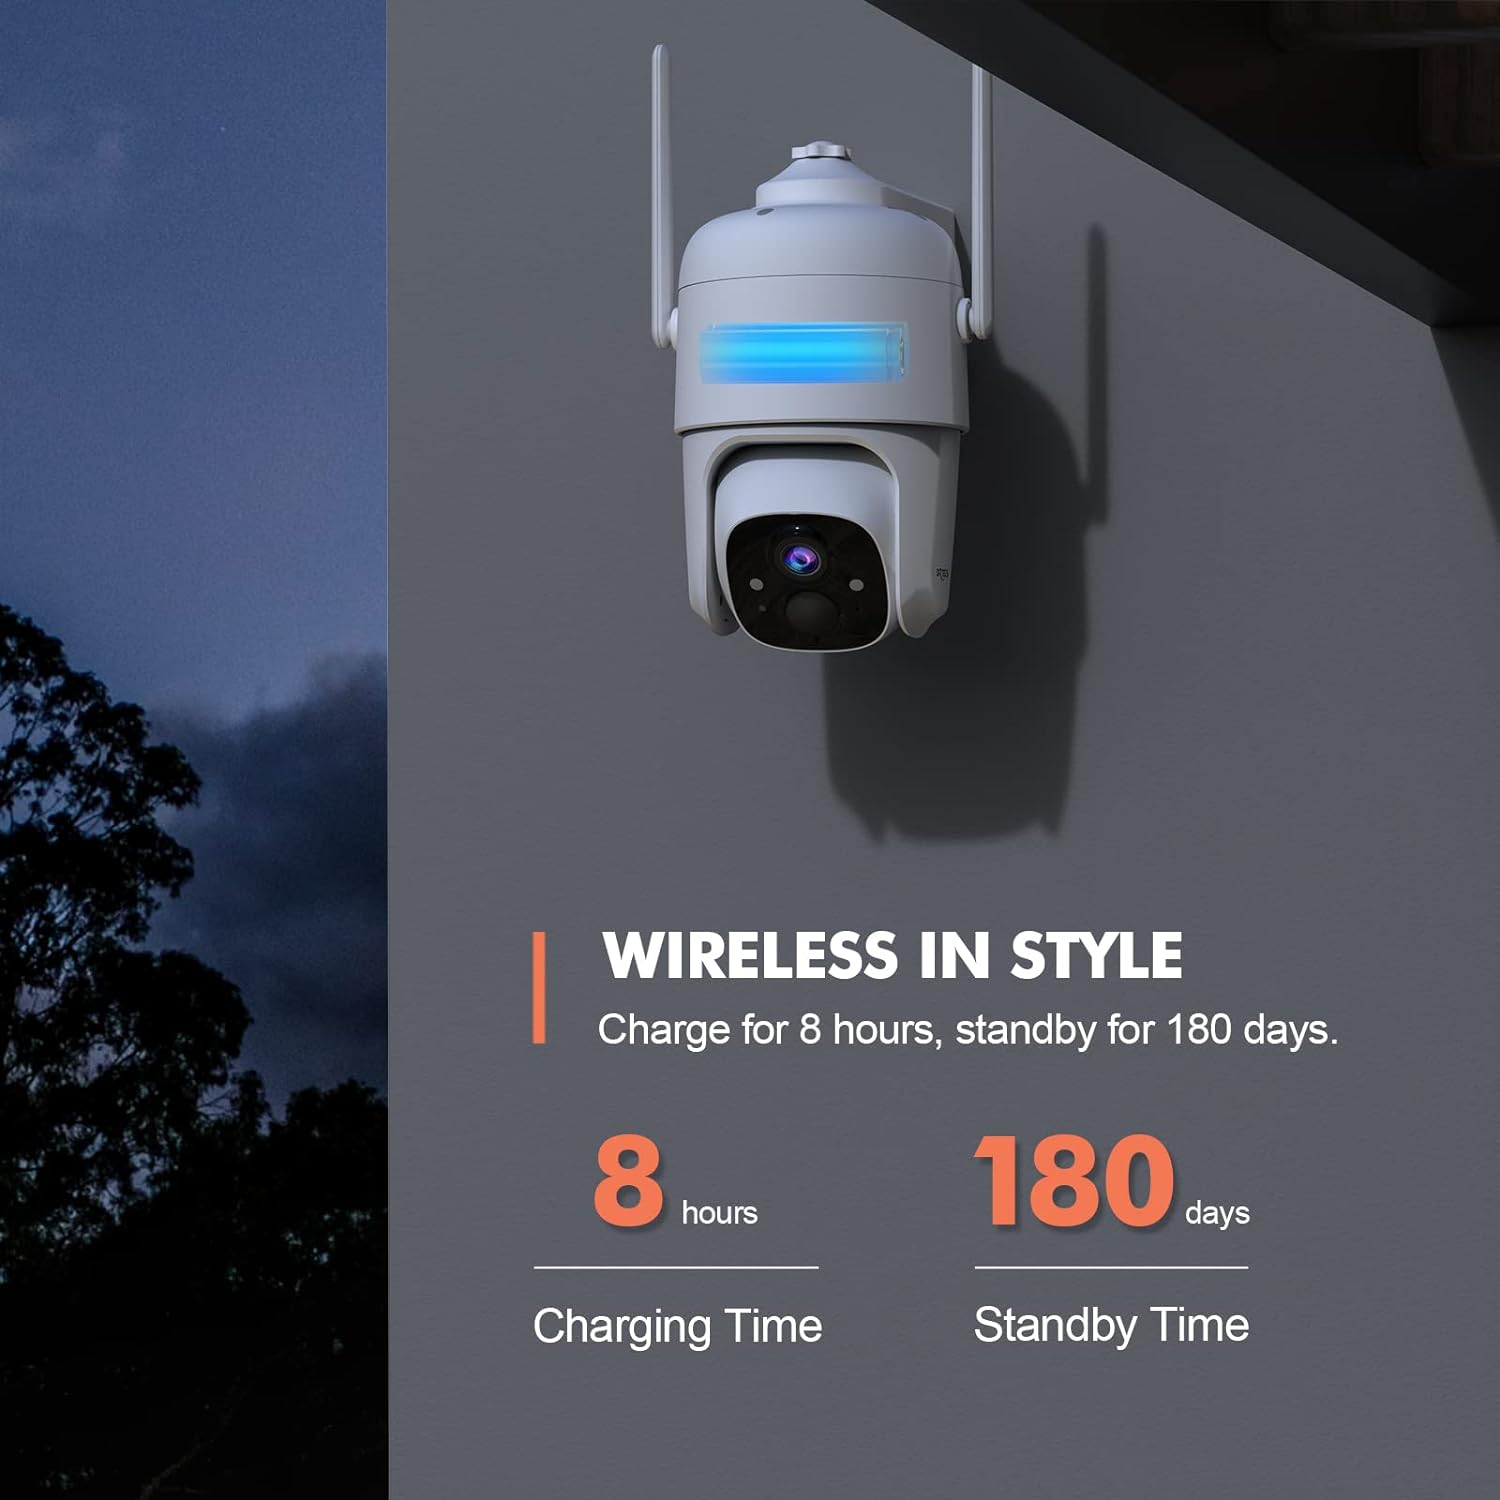 2K 360° PTZ Wireless Security Outdoor WiFi Camera with Siren Alarm Spotlight Dzees D3